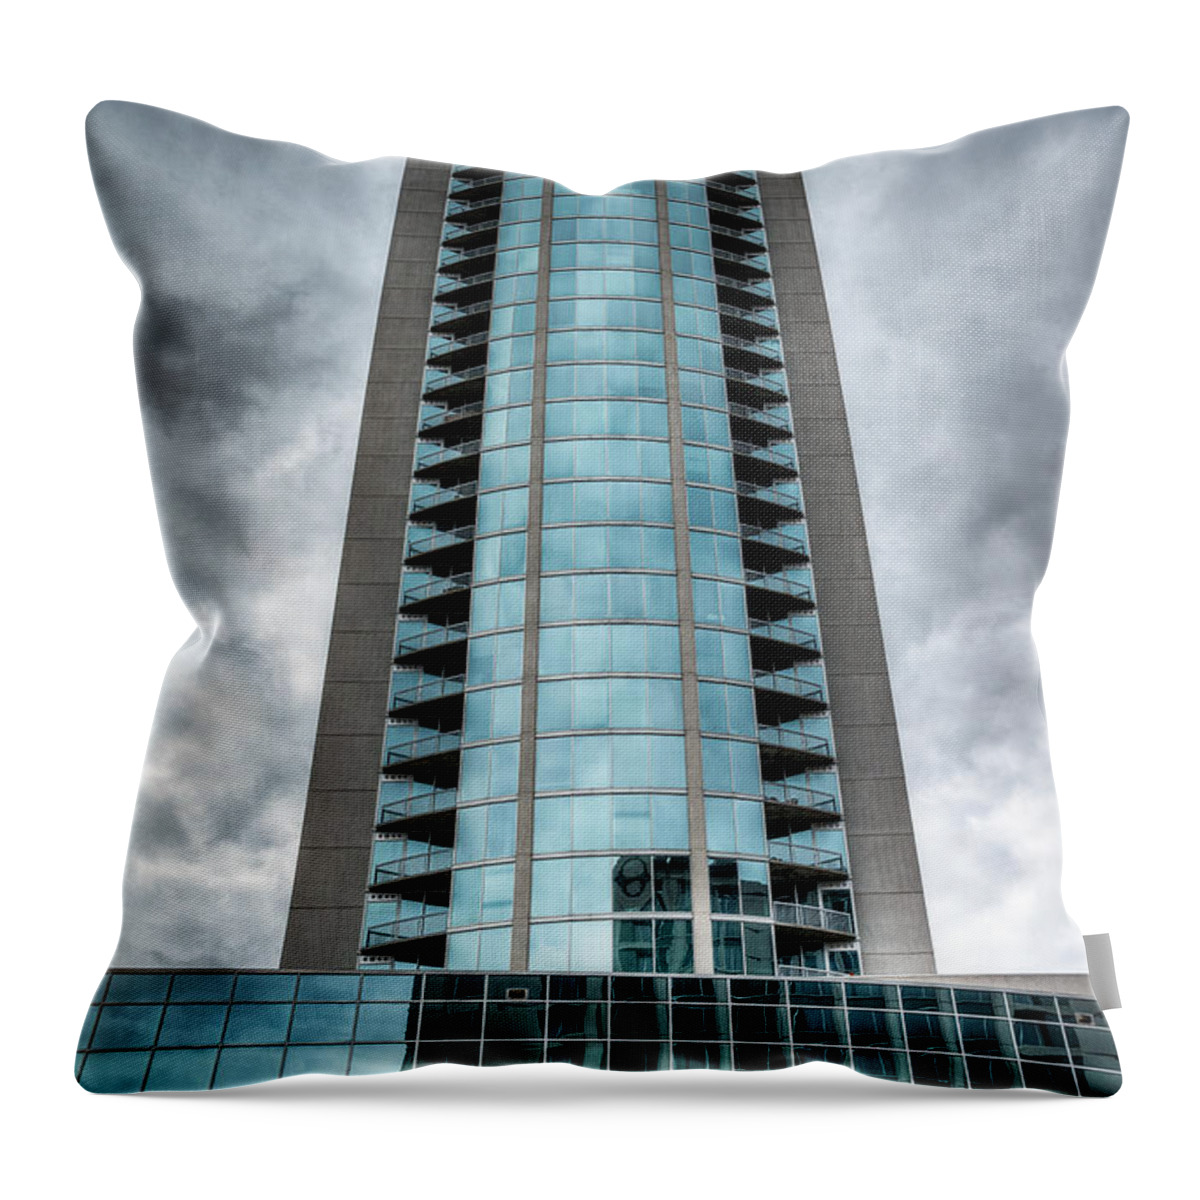 Realm Throw Pillow featuring the photograph Realm Condos Atlanta by Brett Engle